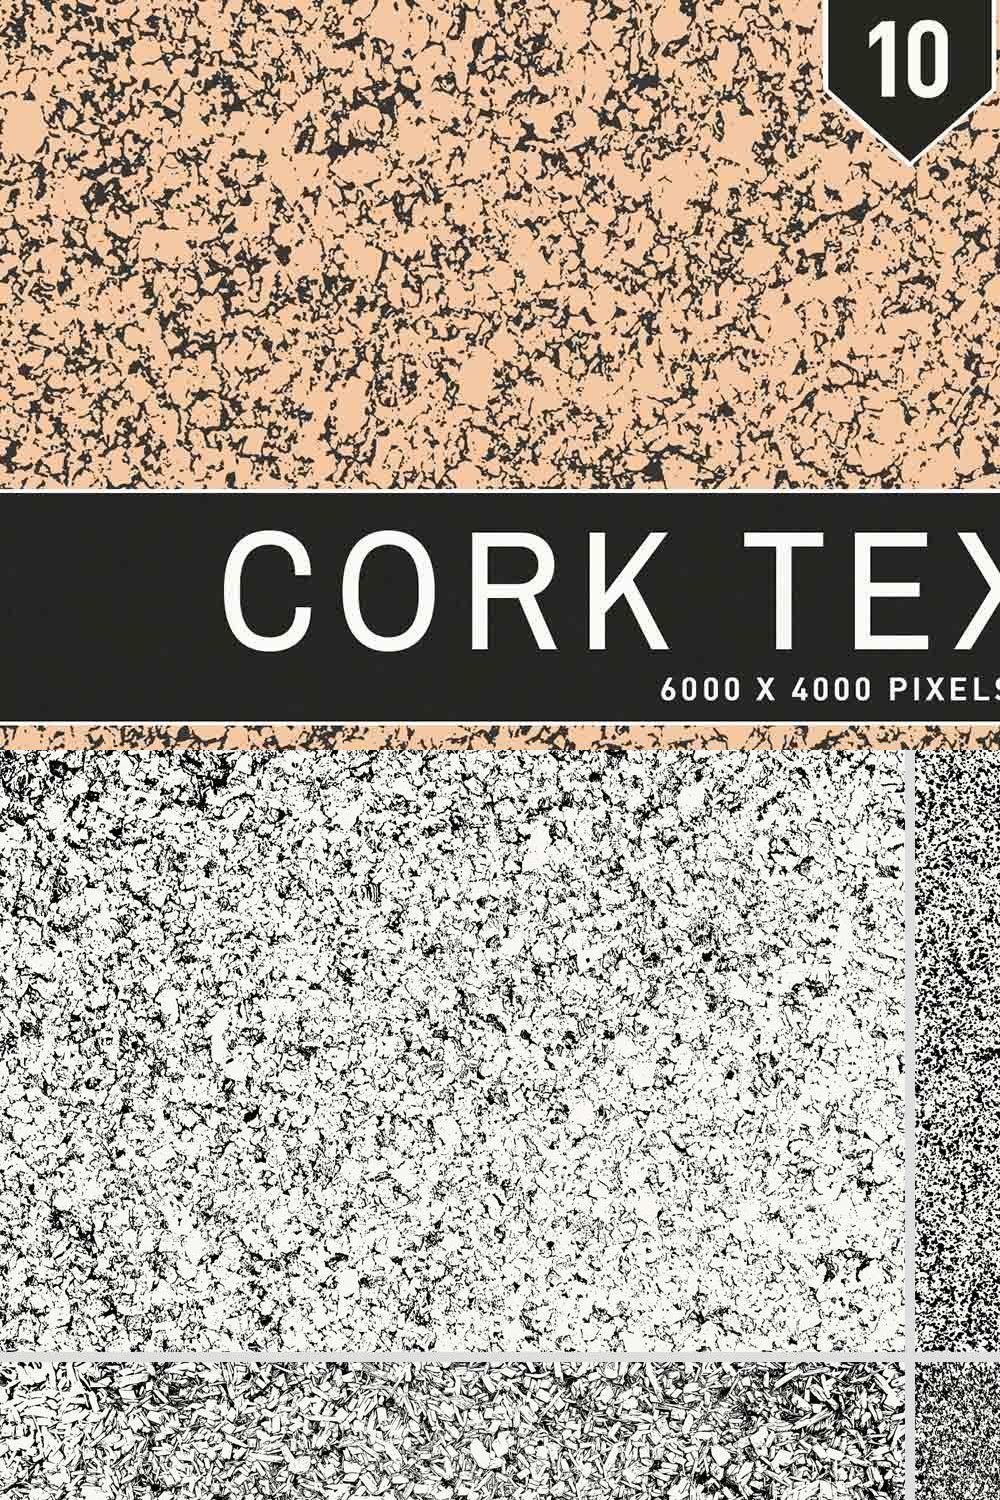 Cork Textures pinterest preview image.